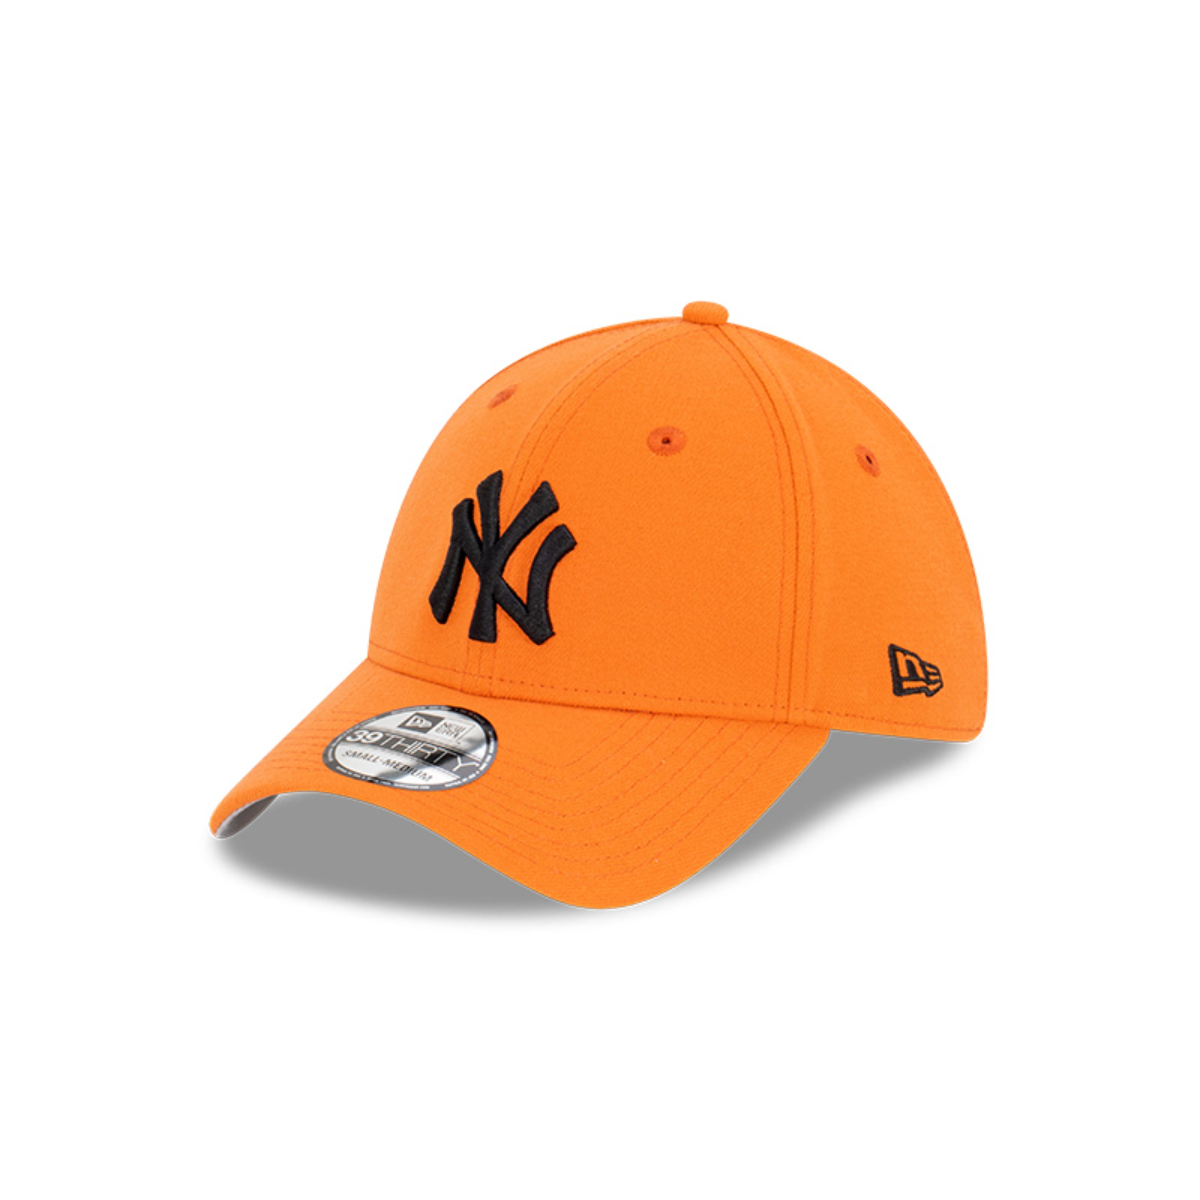 Gorra New Era New York Yankees Naranja | Outdoor Adveture Colombia